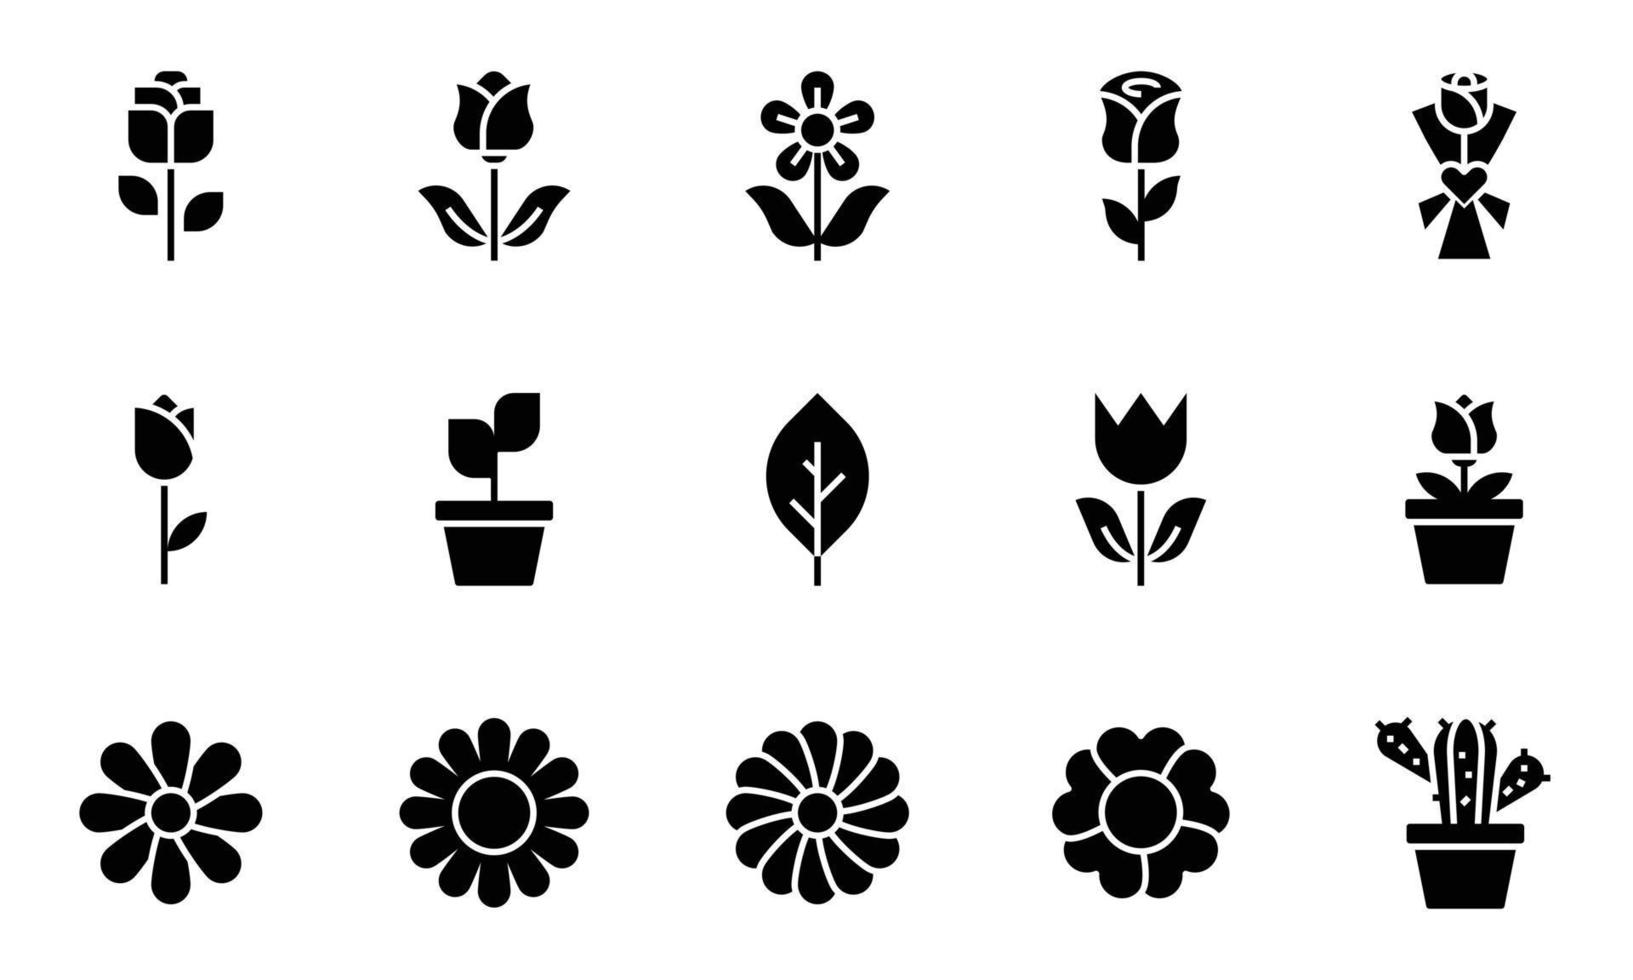 illustratore vettoriale di icone di fiori, floreale, rosa, cactus